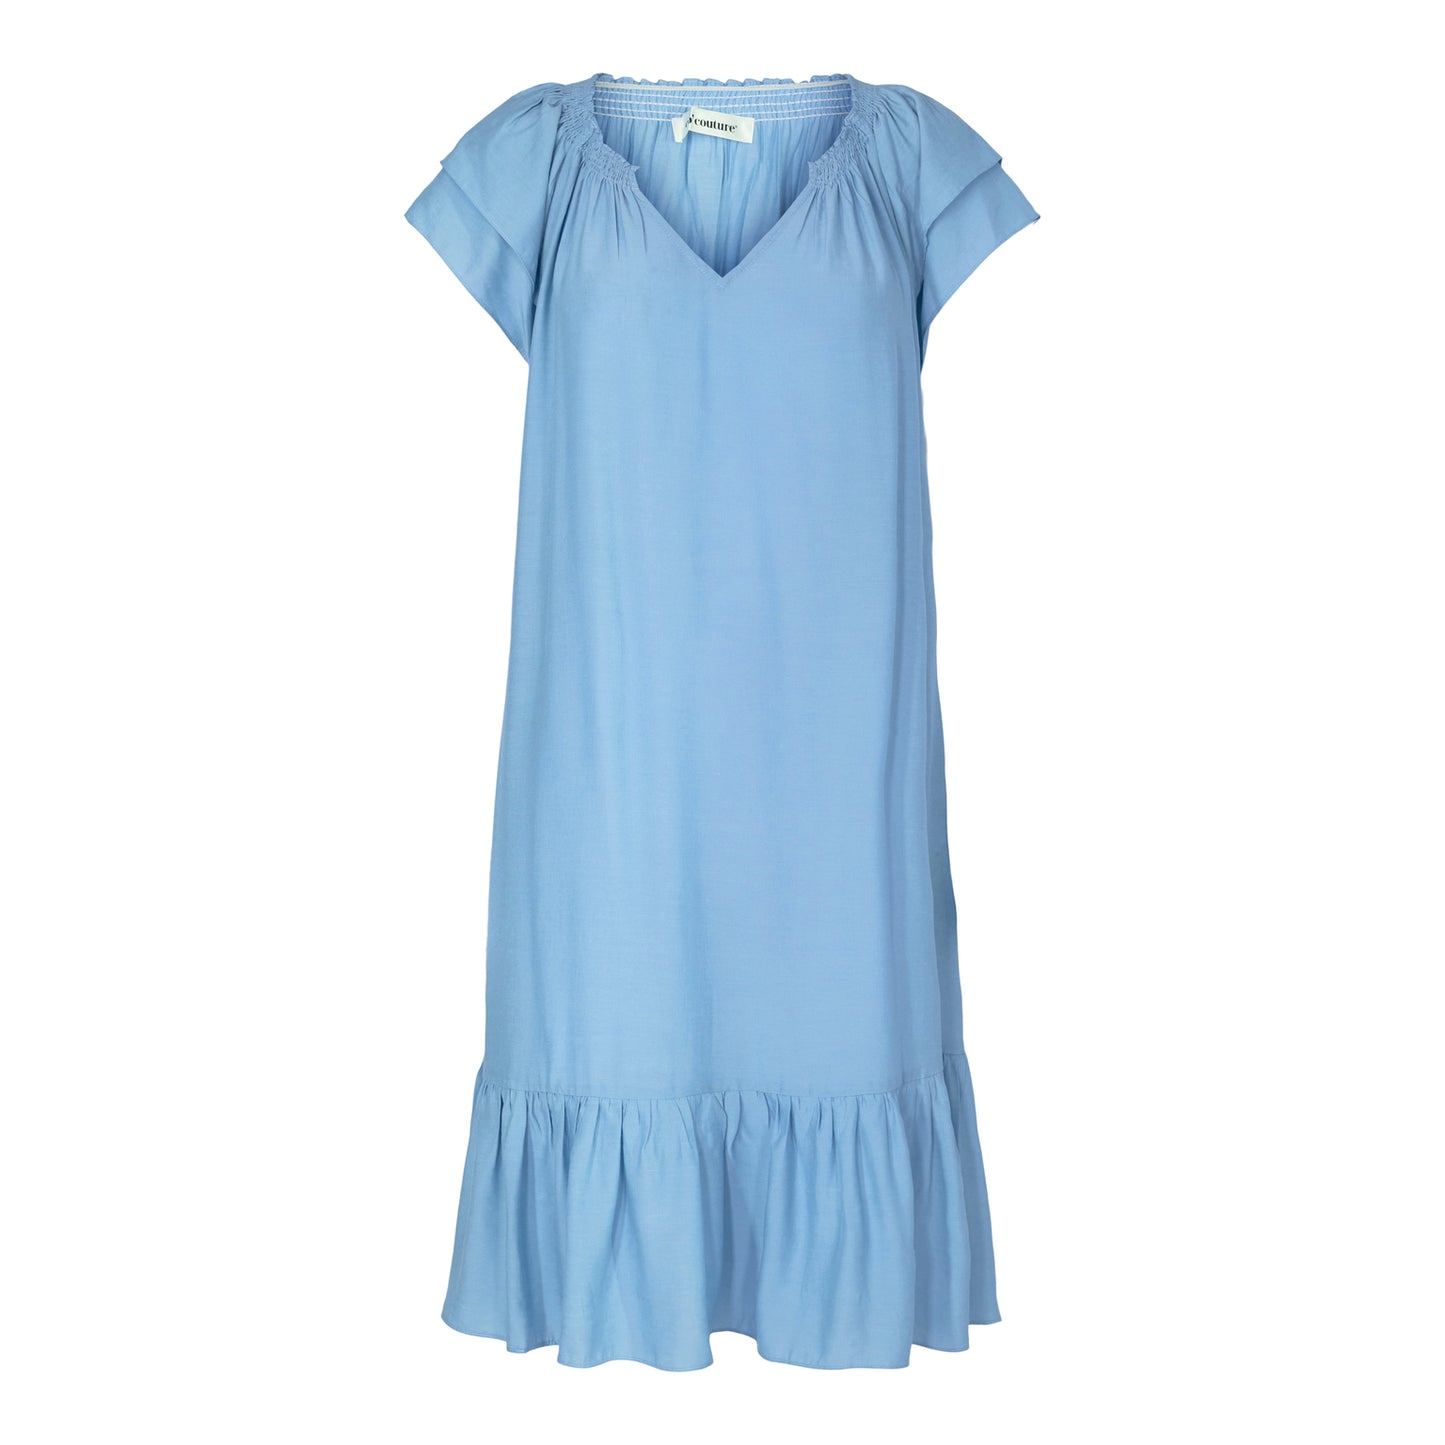 Cocouture - SunriseCC Crop Dress - Pale Blue